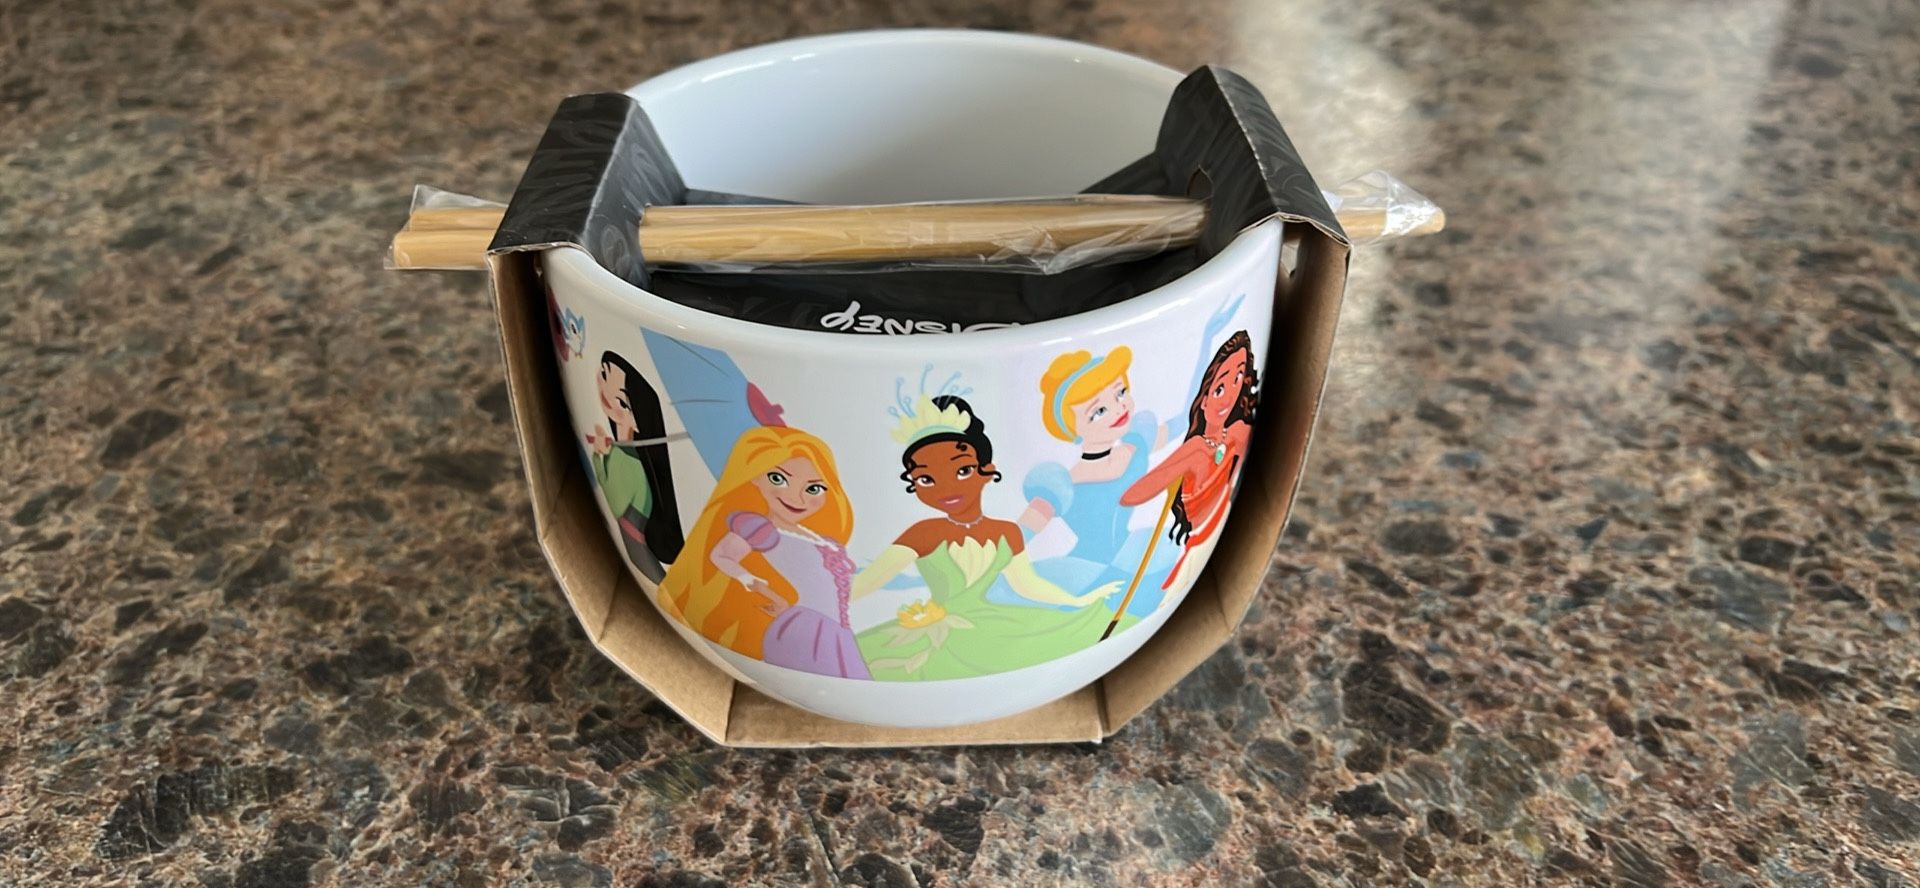 New Disney Princesses Ramen Pasta Noodle Bowl with Chopsticks